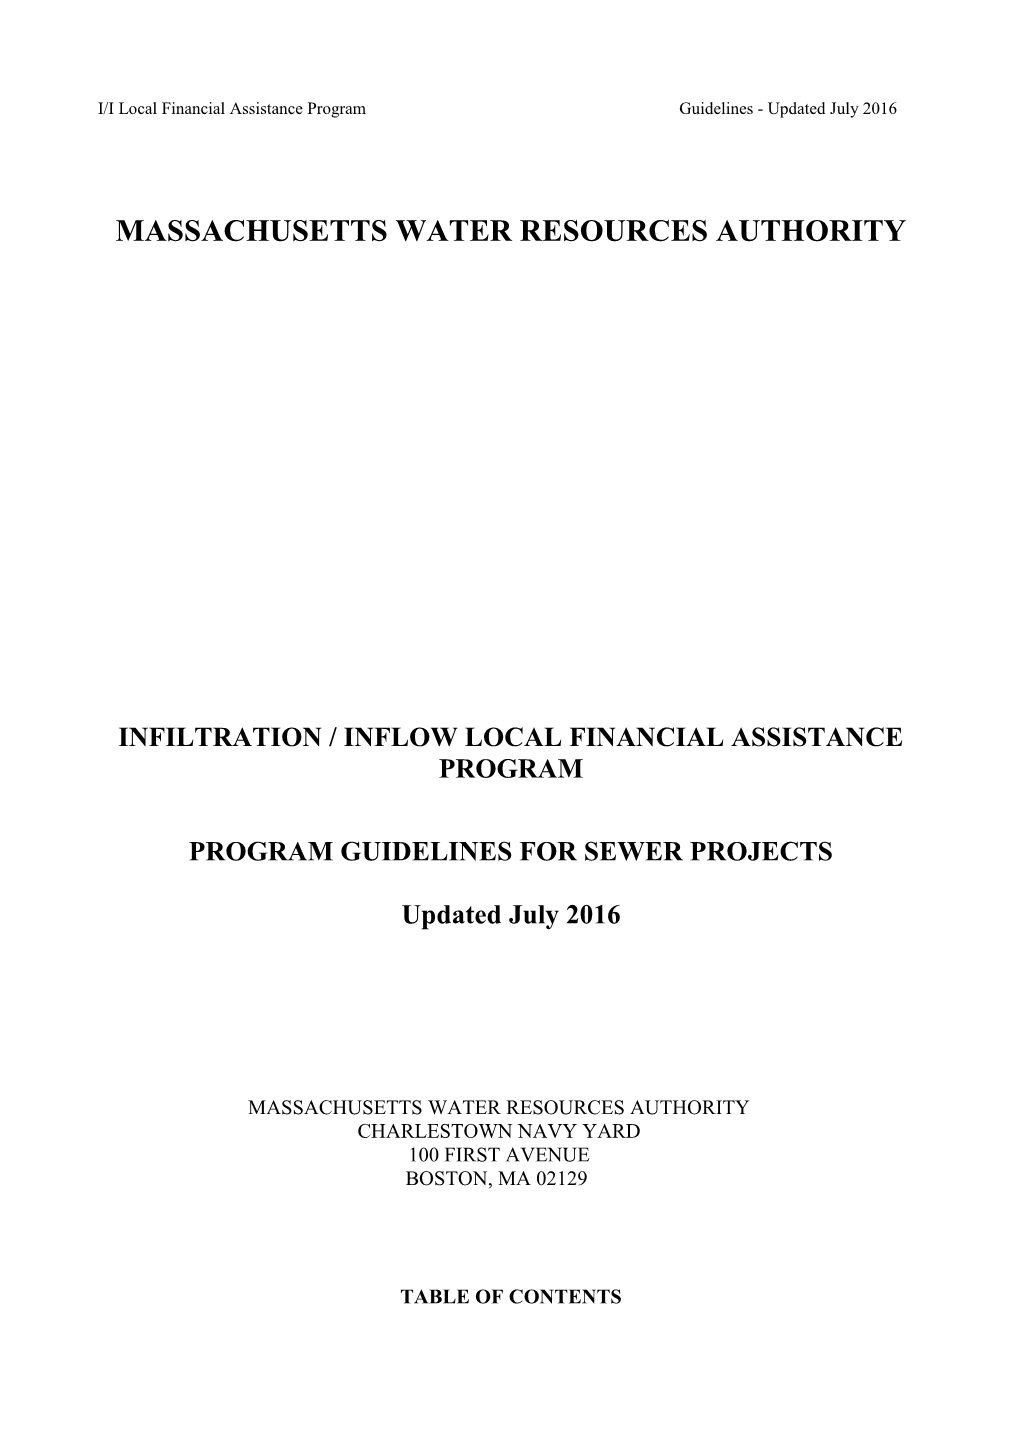 Massachusetts Water Resources Authority s1